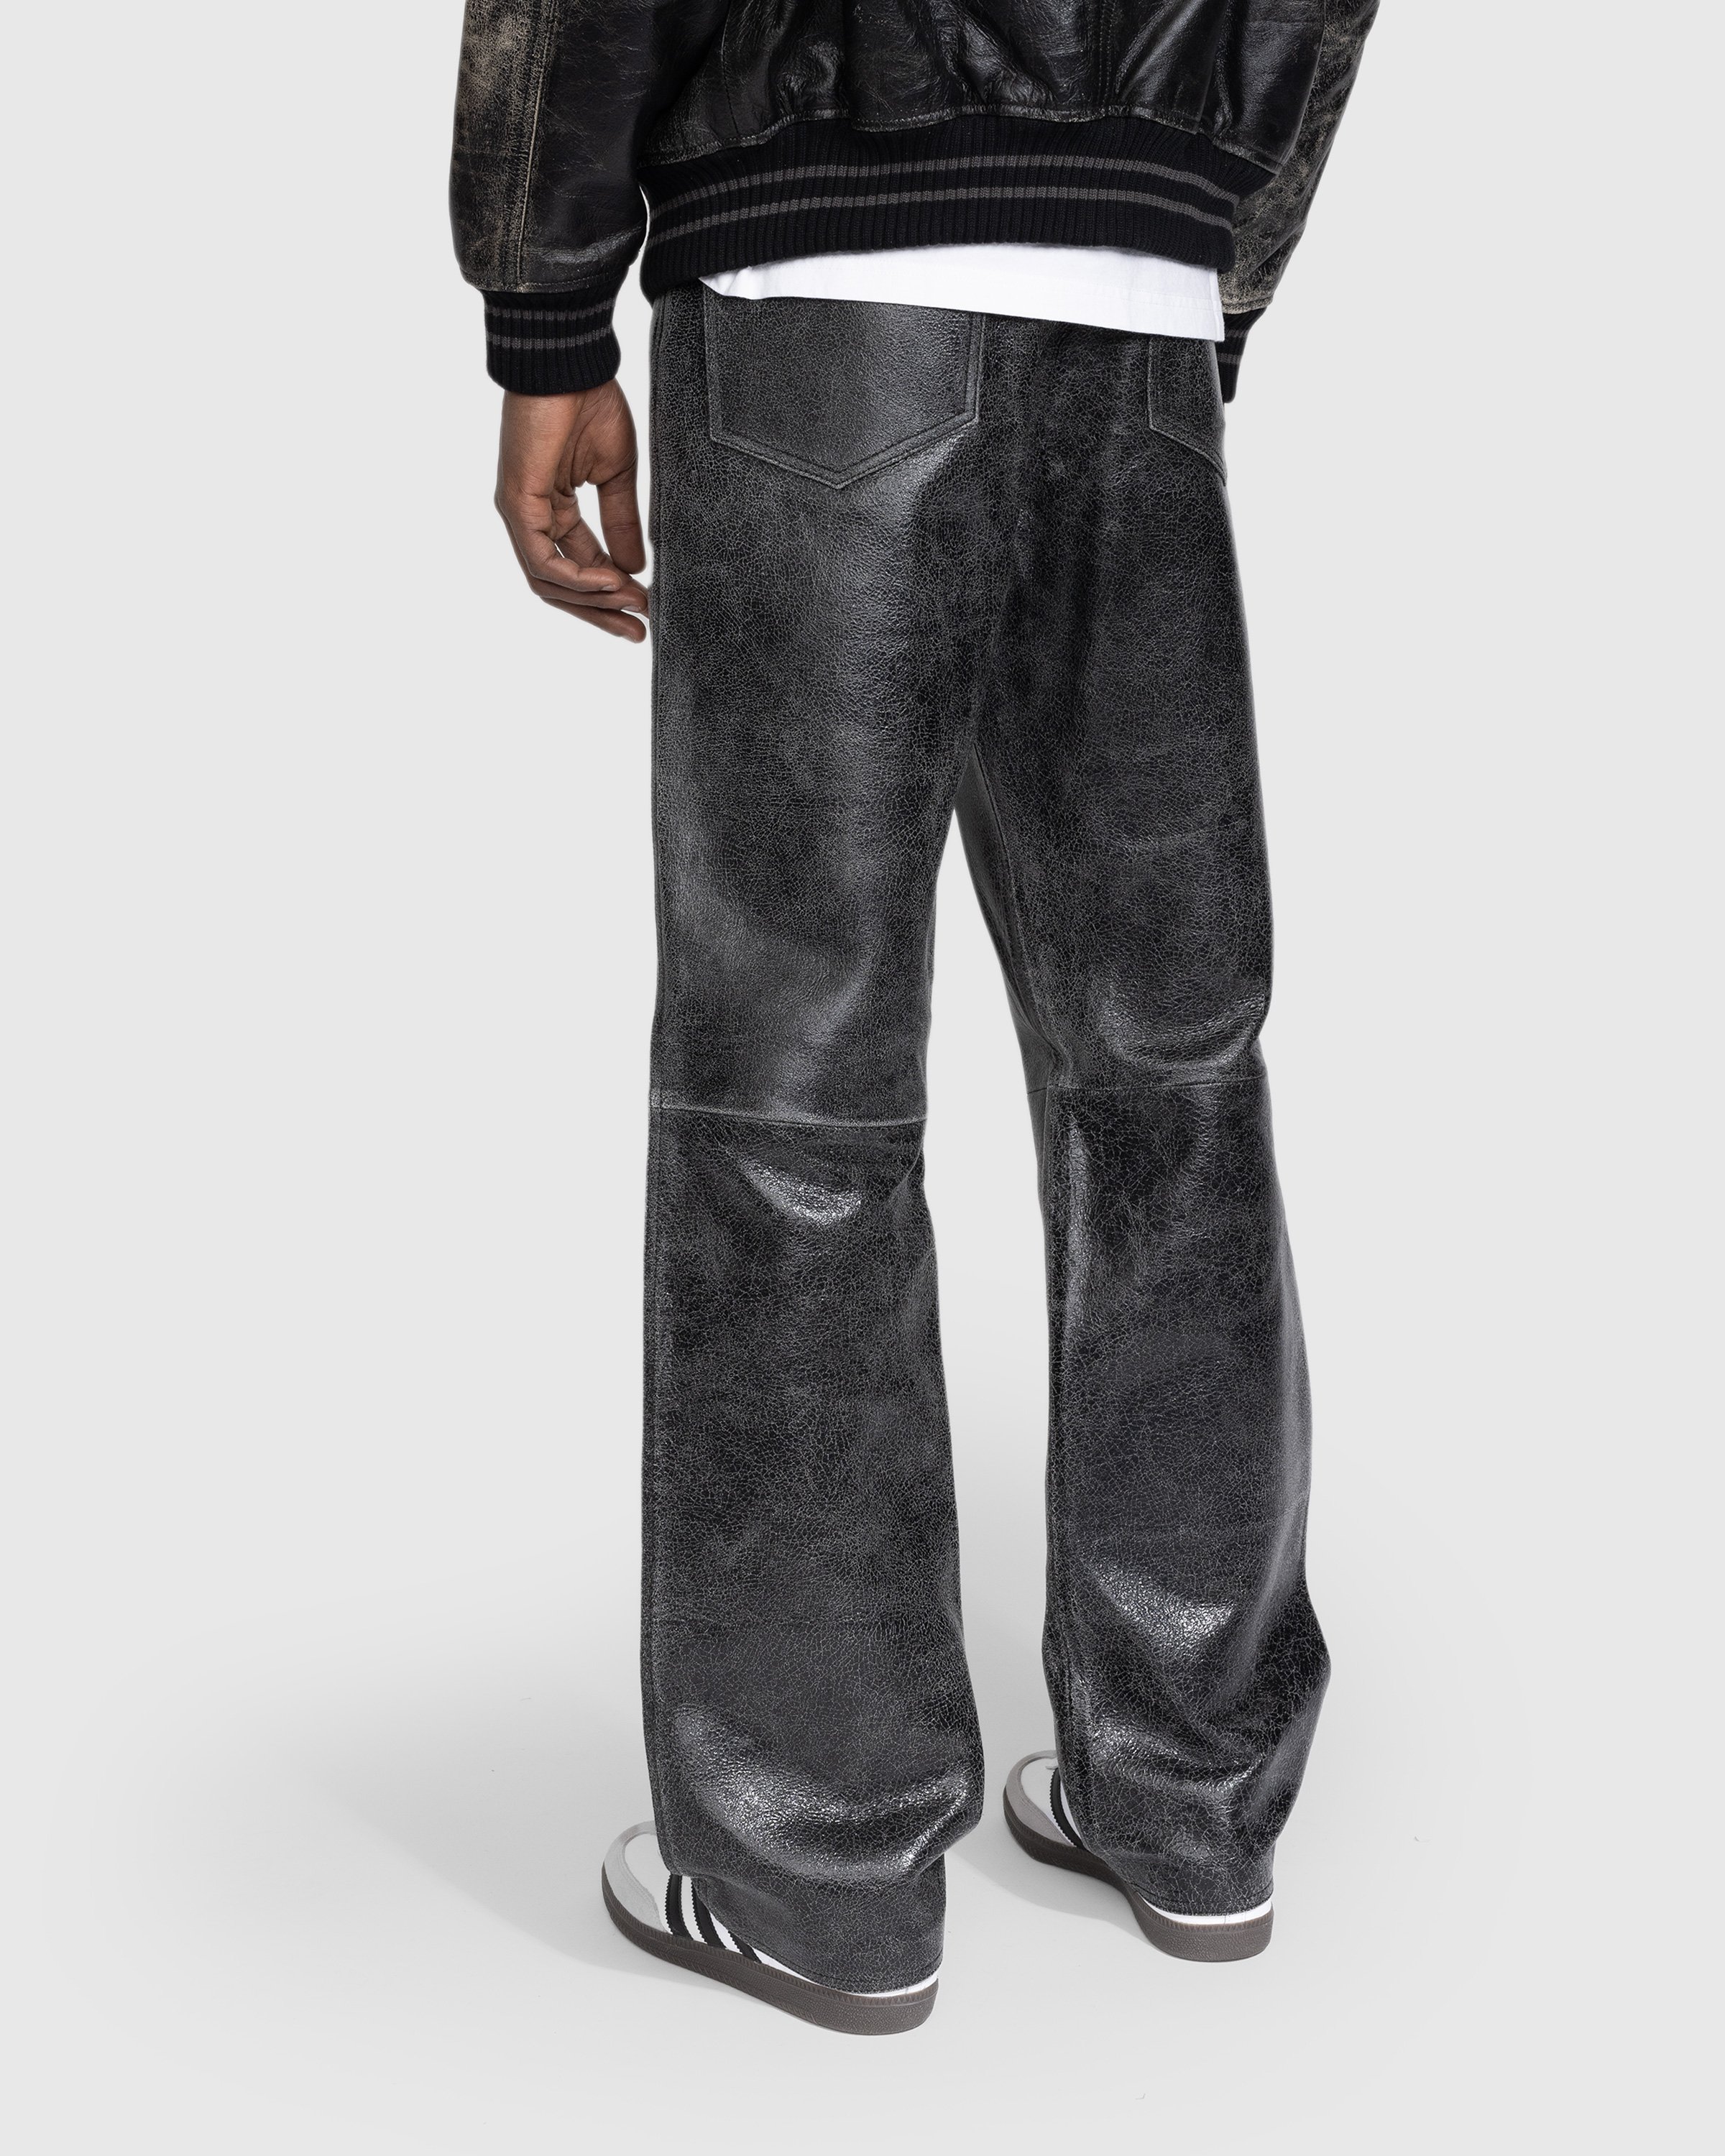 Guess USA - Crackle Leather Flare Pant Jet Black - Clothing - Black - Image 3